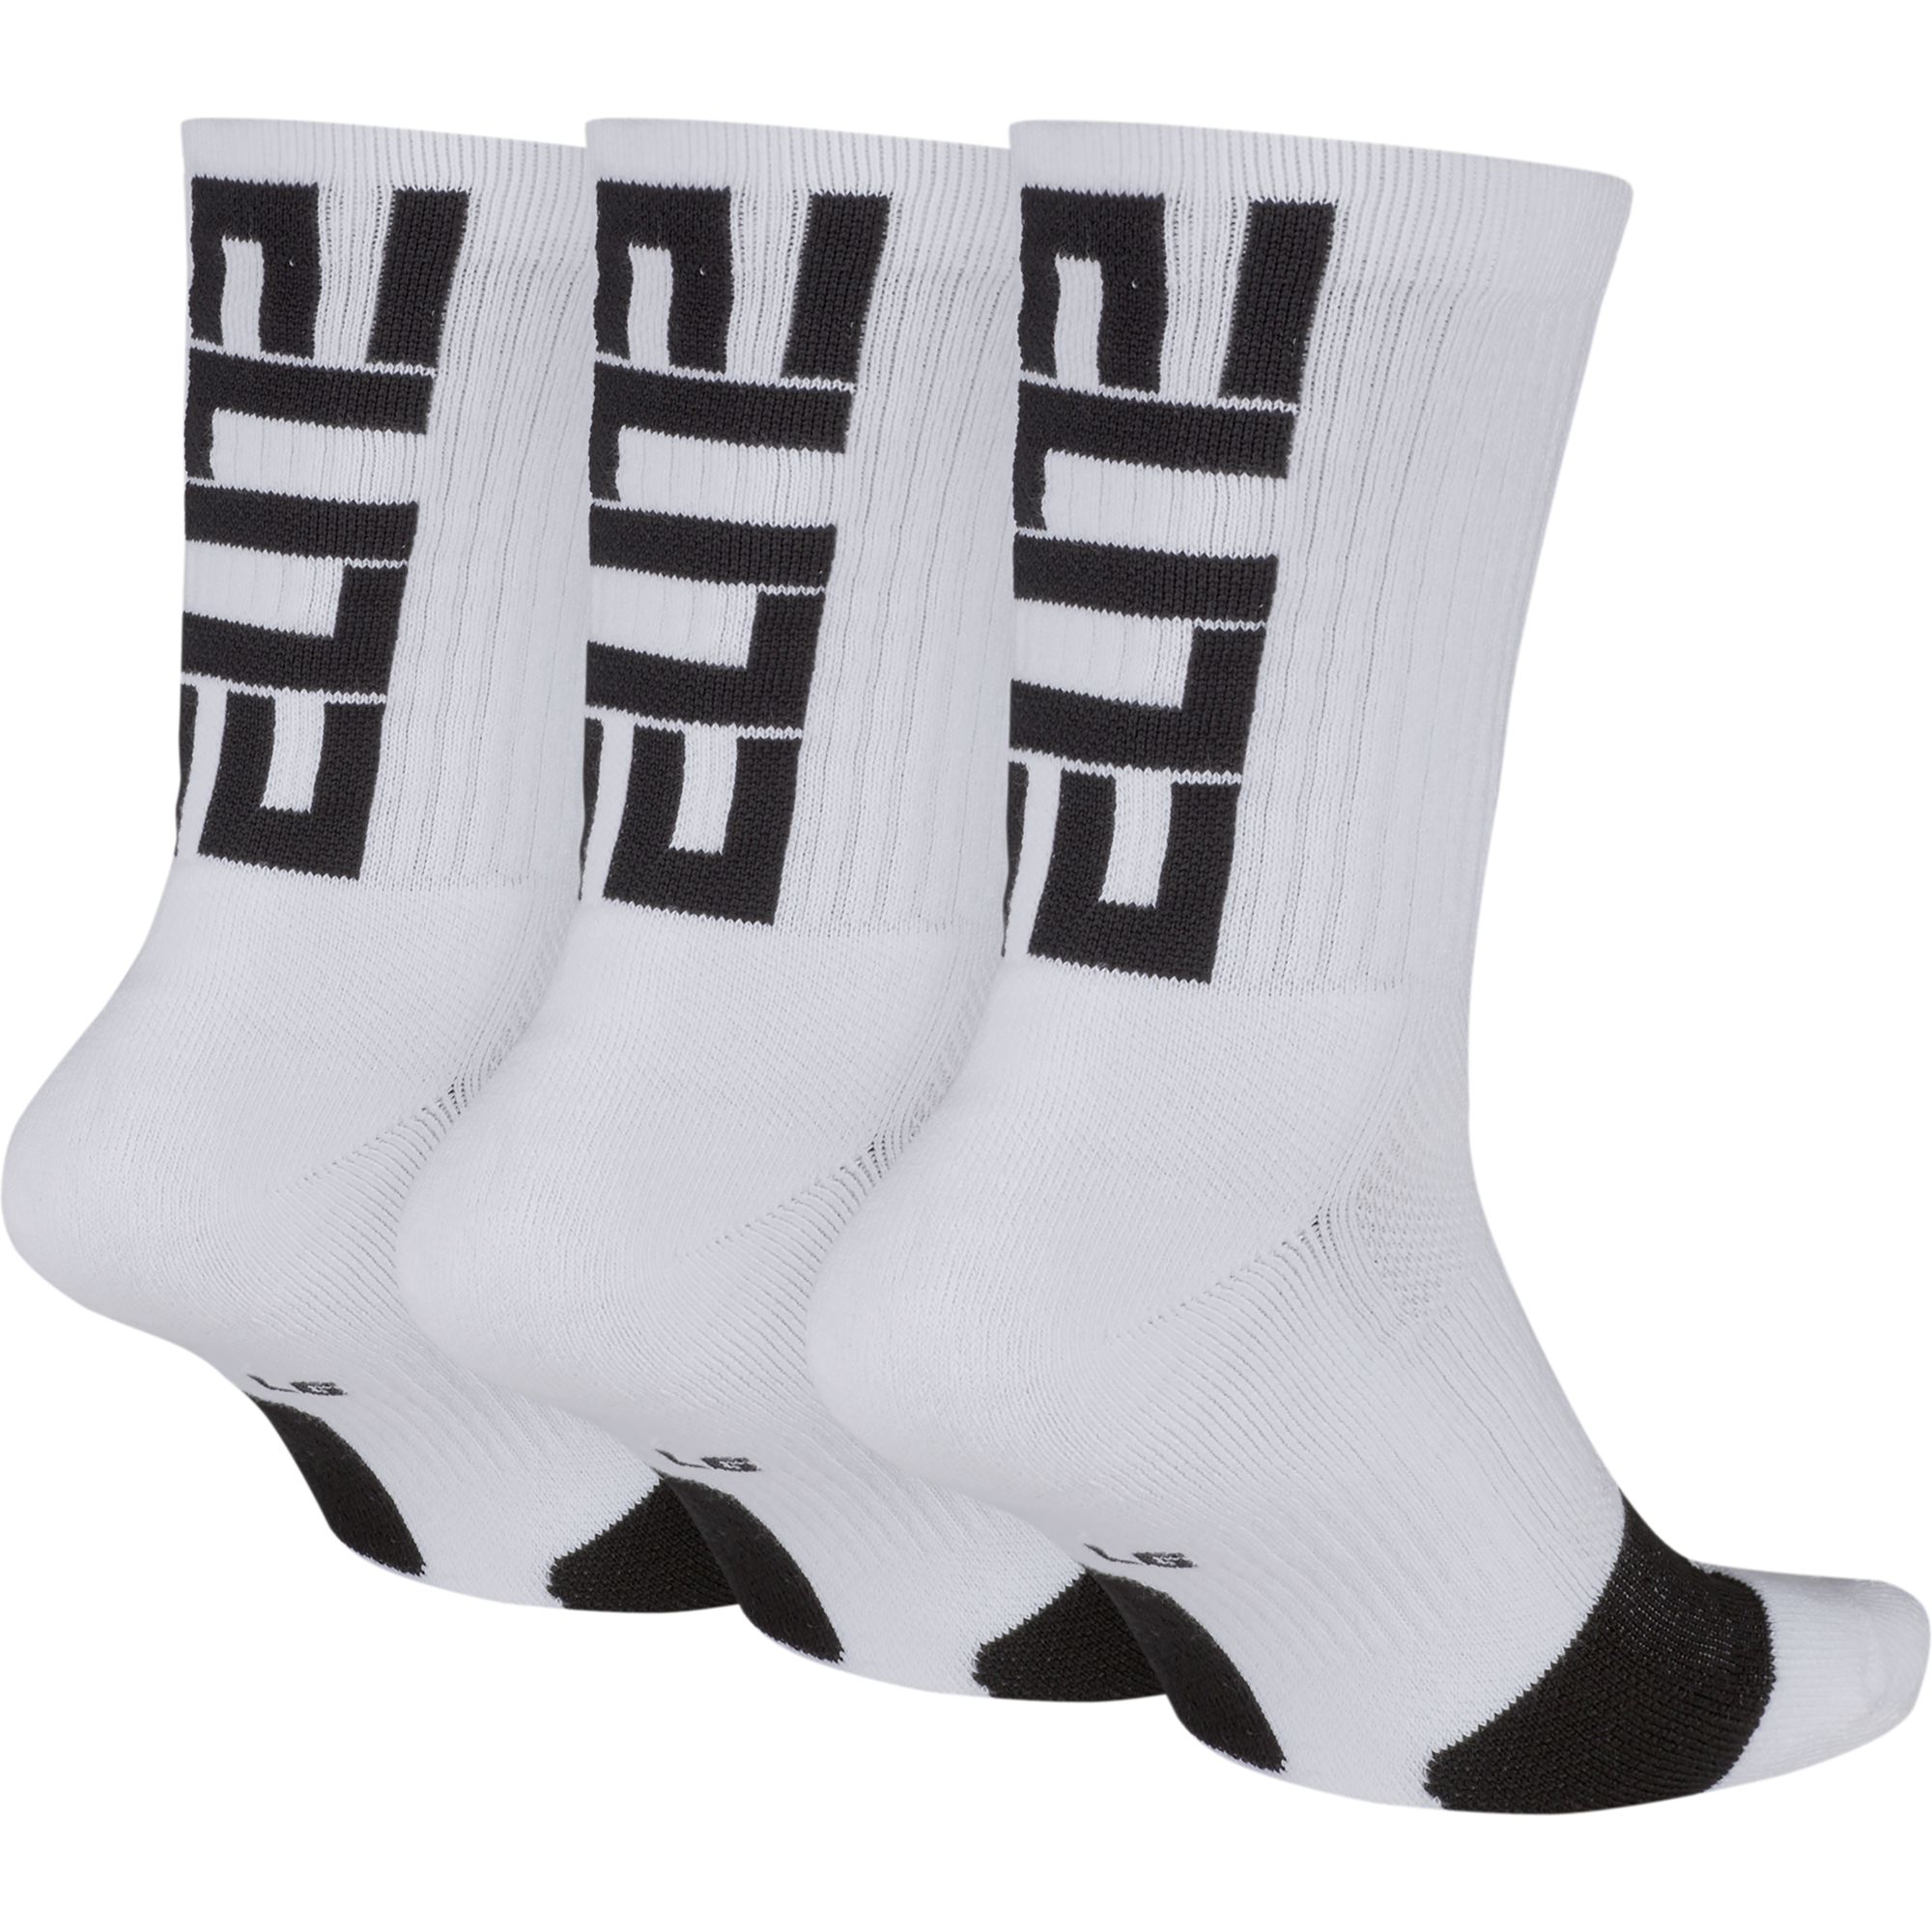 nike elite socks 2019